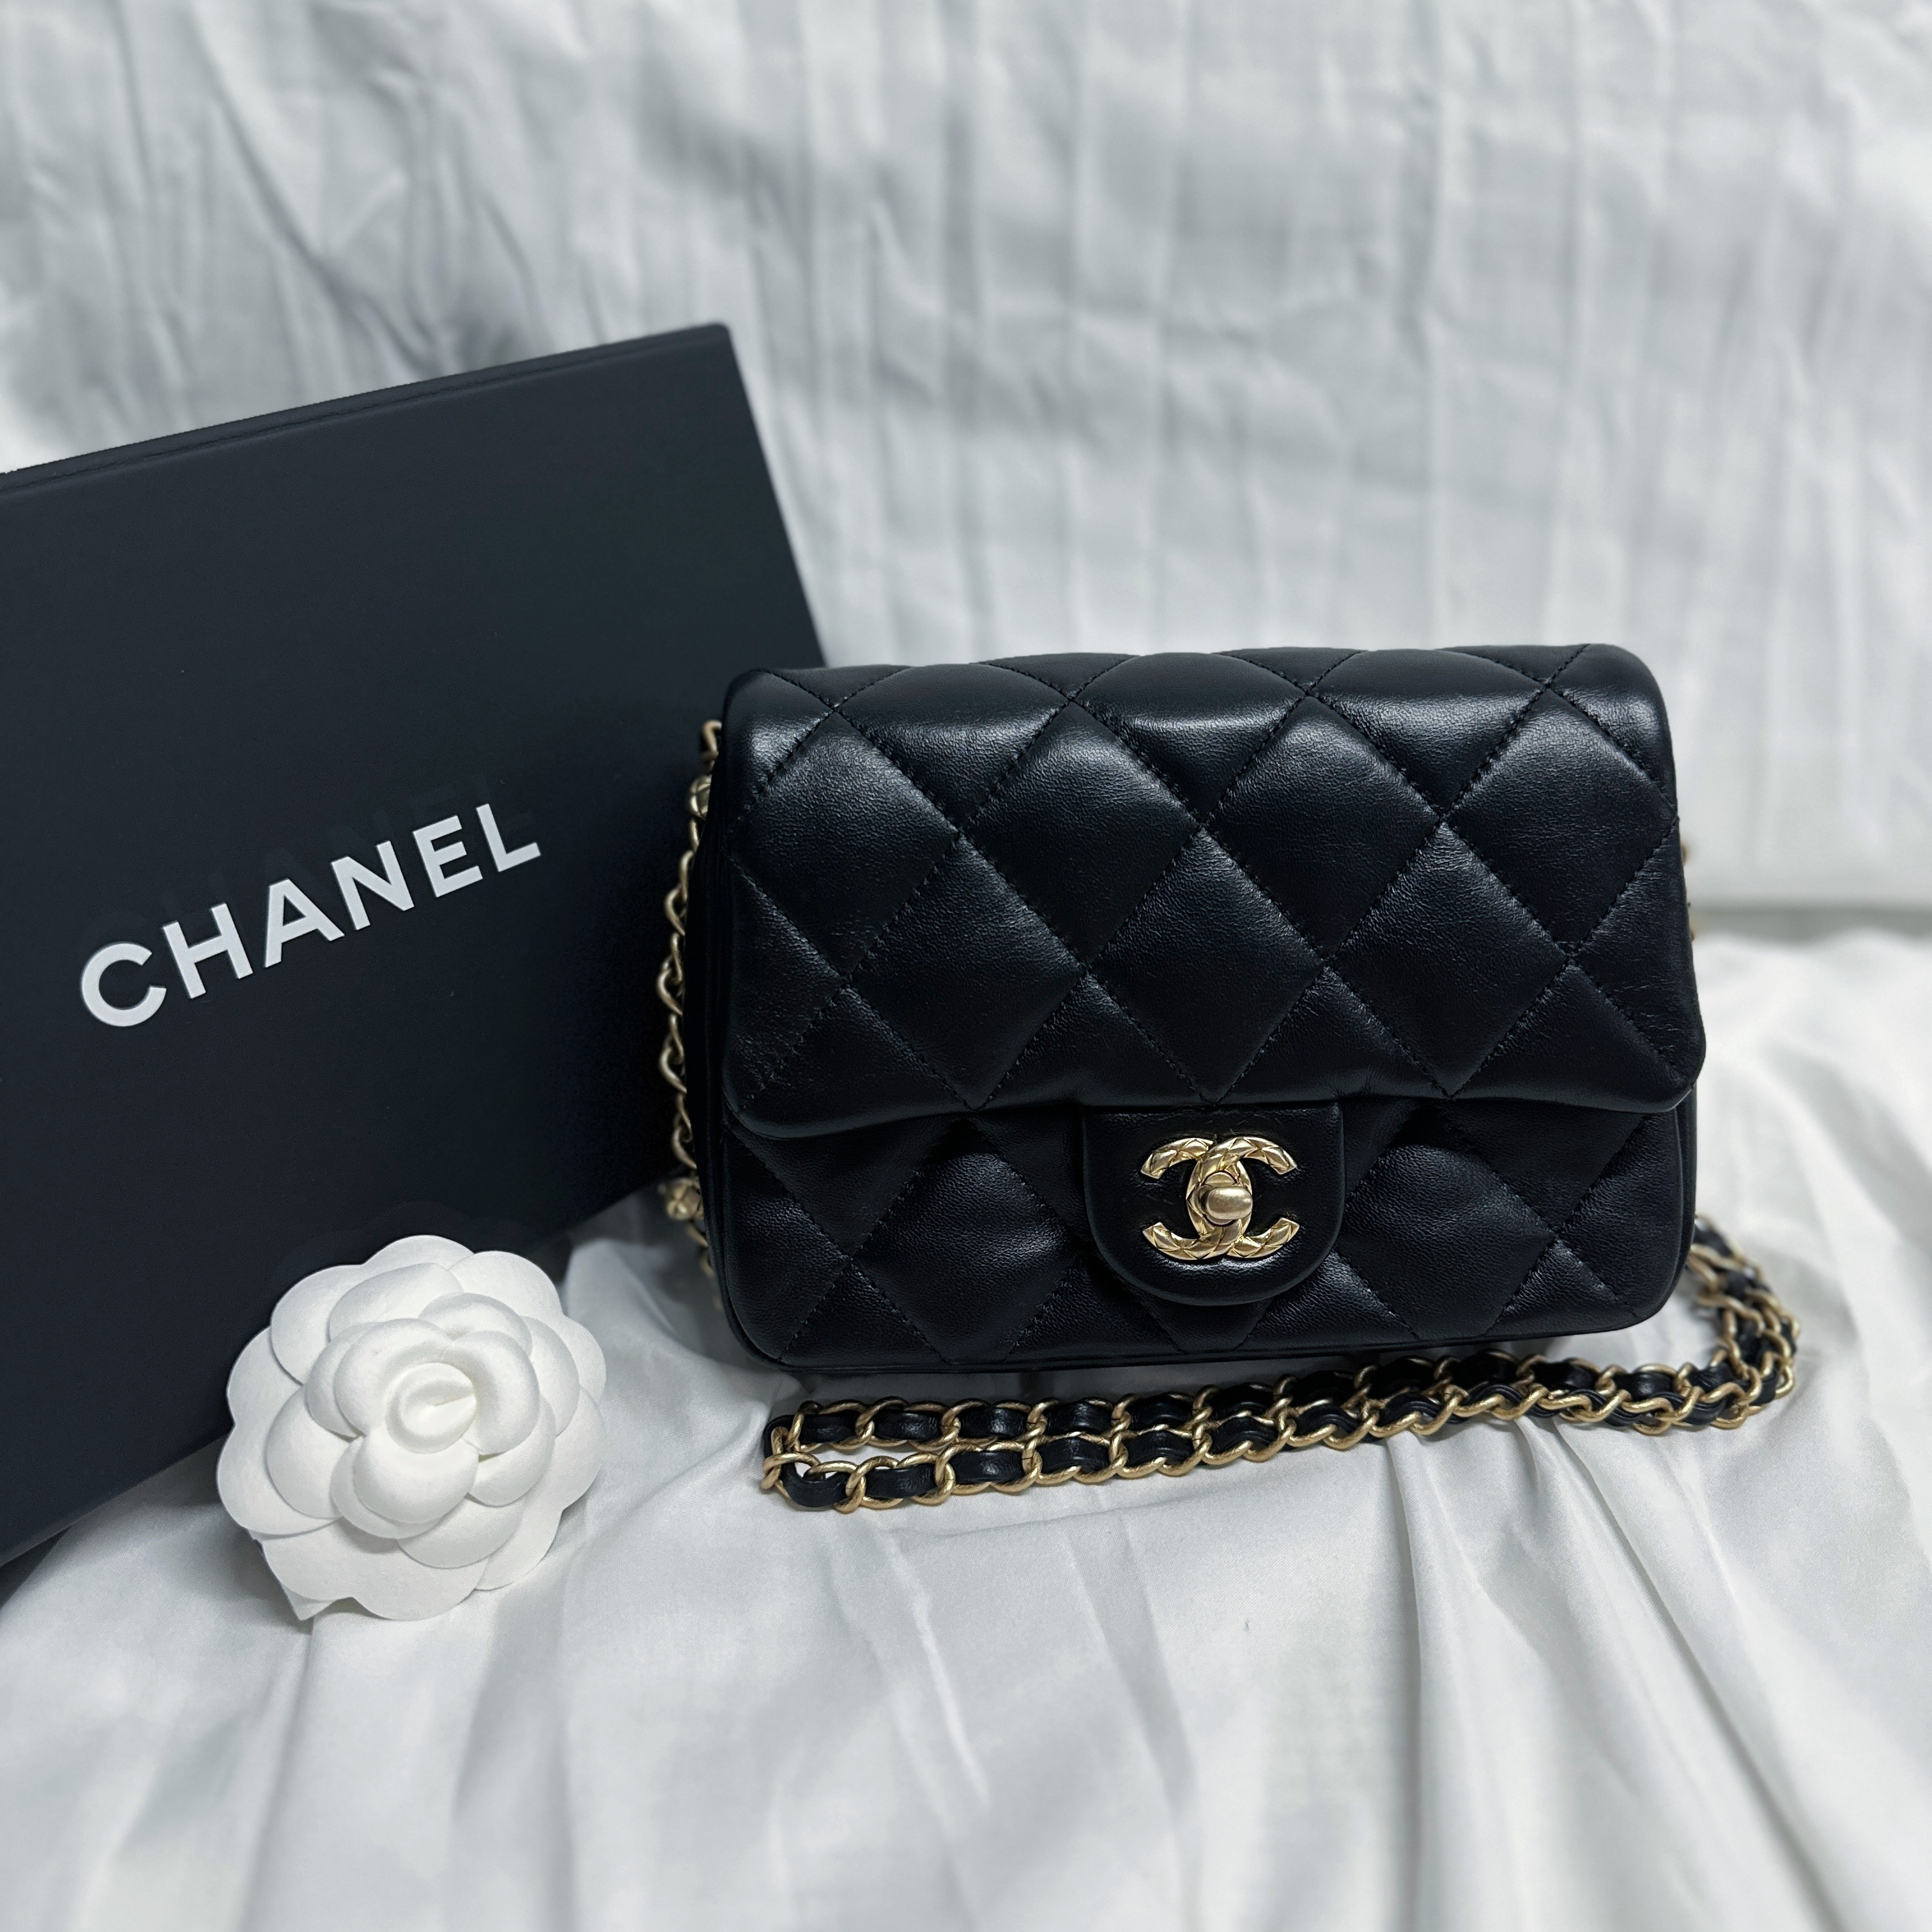 Where can I buy a 1:1 replica Chanel bag? - Quora